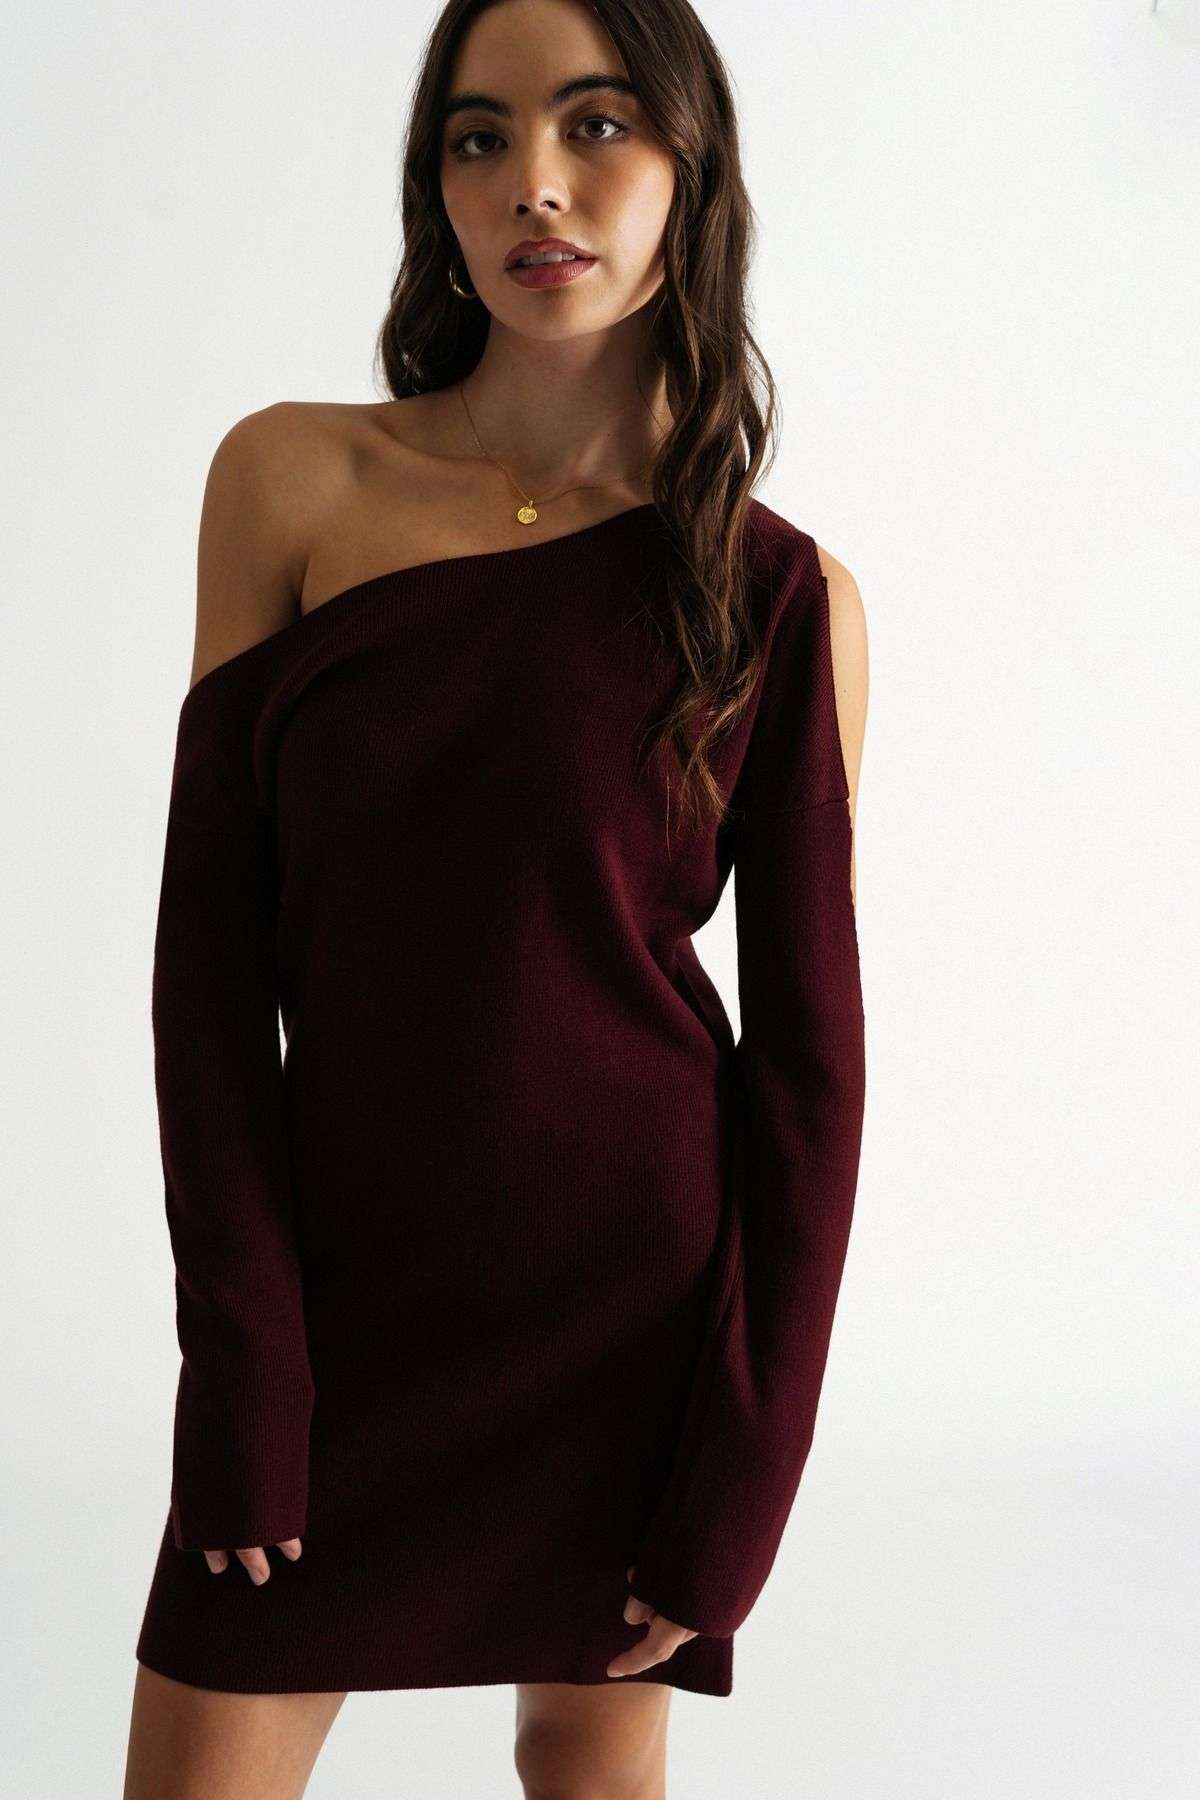 Мини-платье-свитер Olivia с одним боковым рукавом